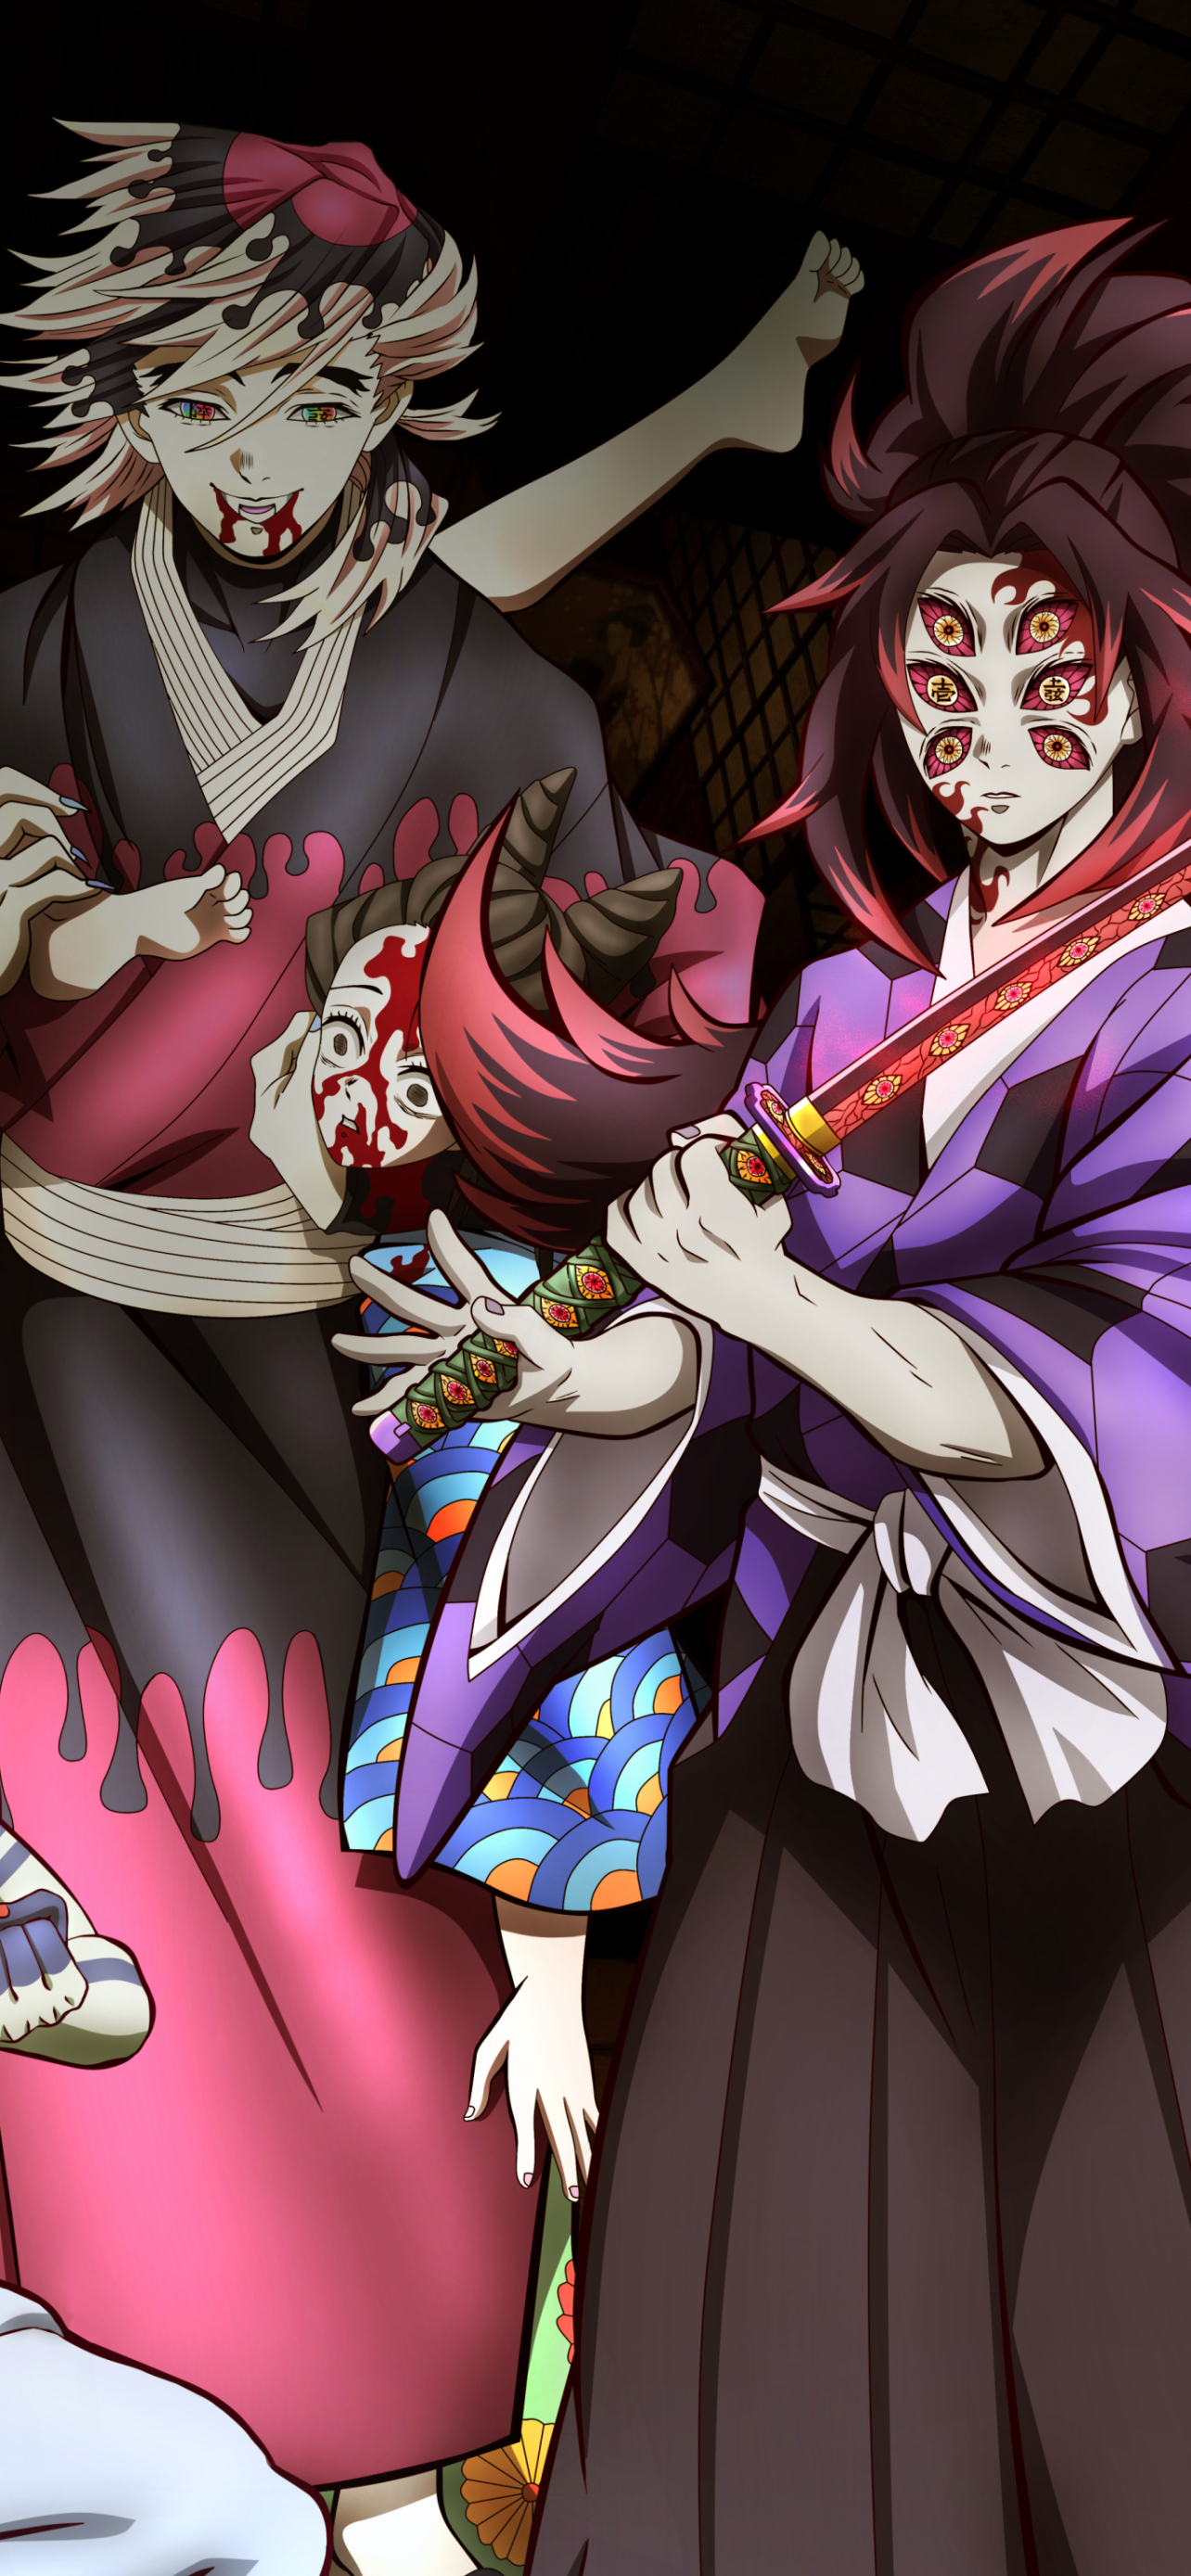 Demon Slayer: Kimetsu no Yaiba Phone Wallpaper by DT501061 余佳軒